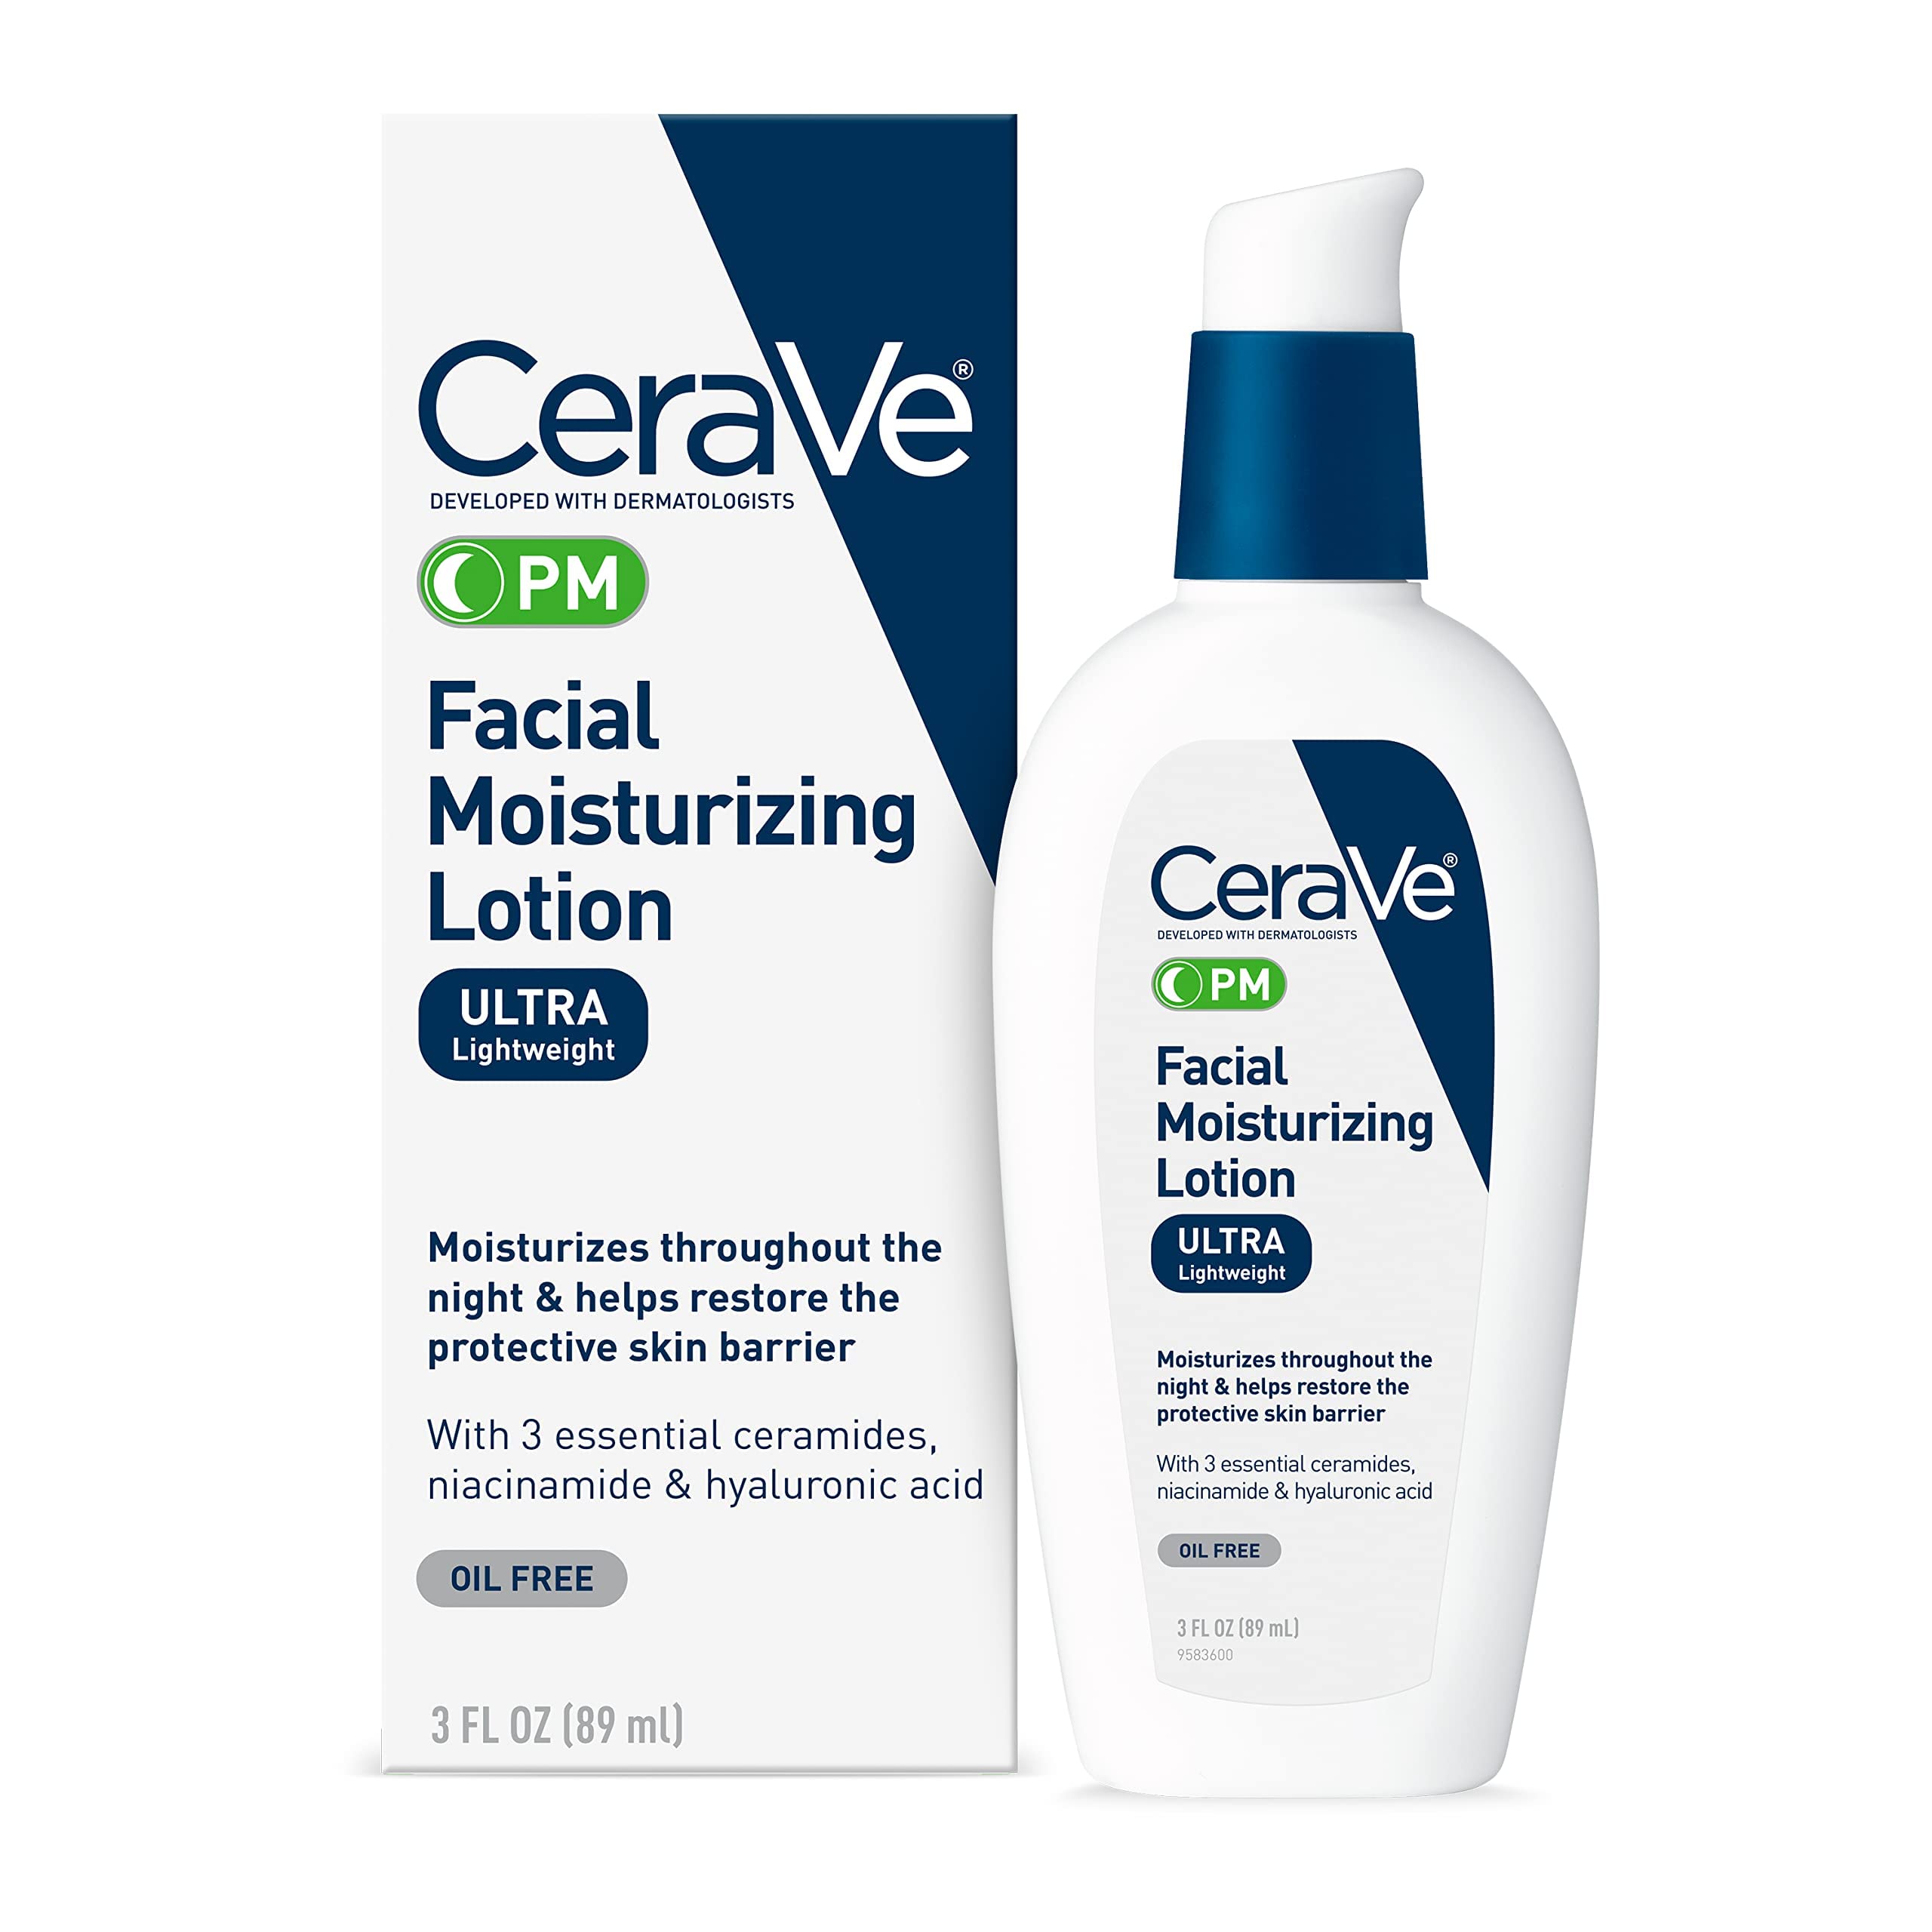 Thiết kế của kem dưỡng Cerave PM Facial Moisturizing Lotion